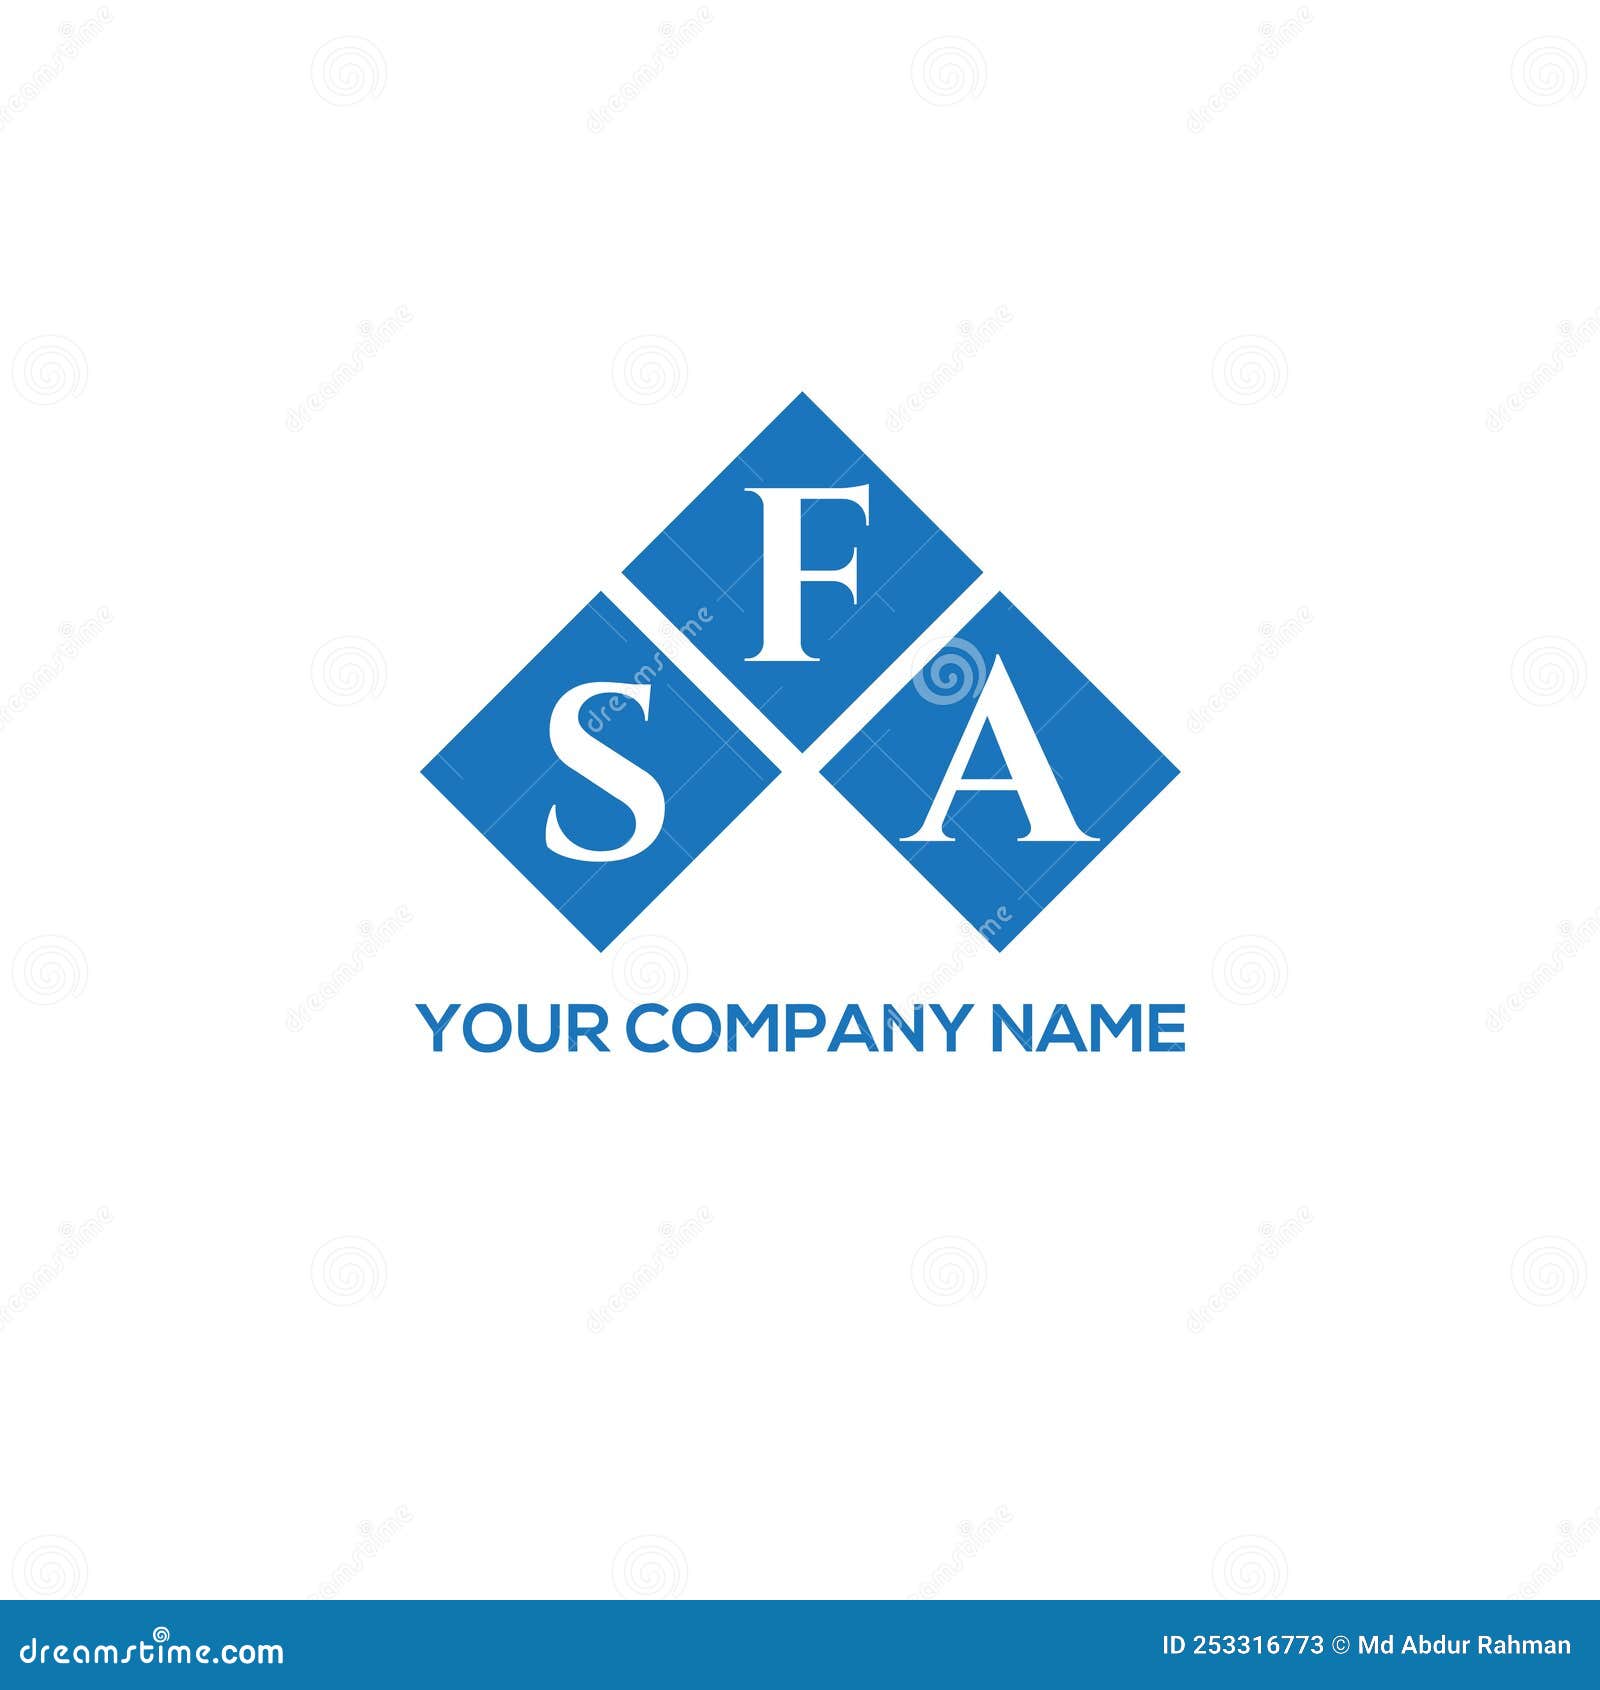 SFA Logo  Sfa, ? logo